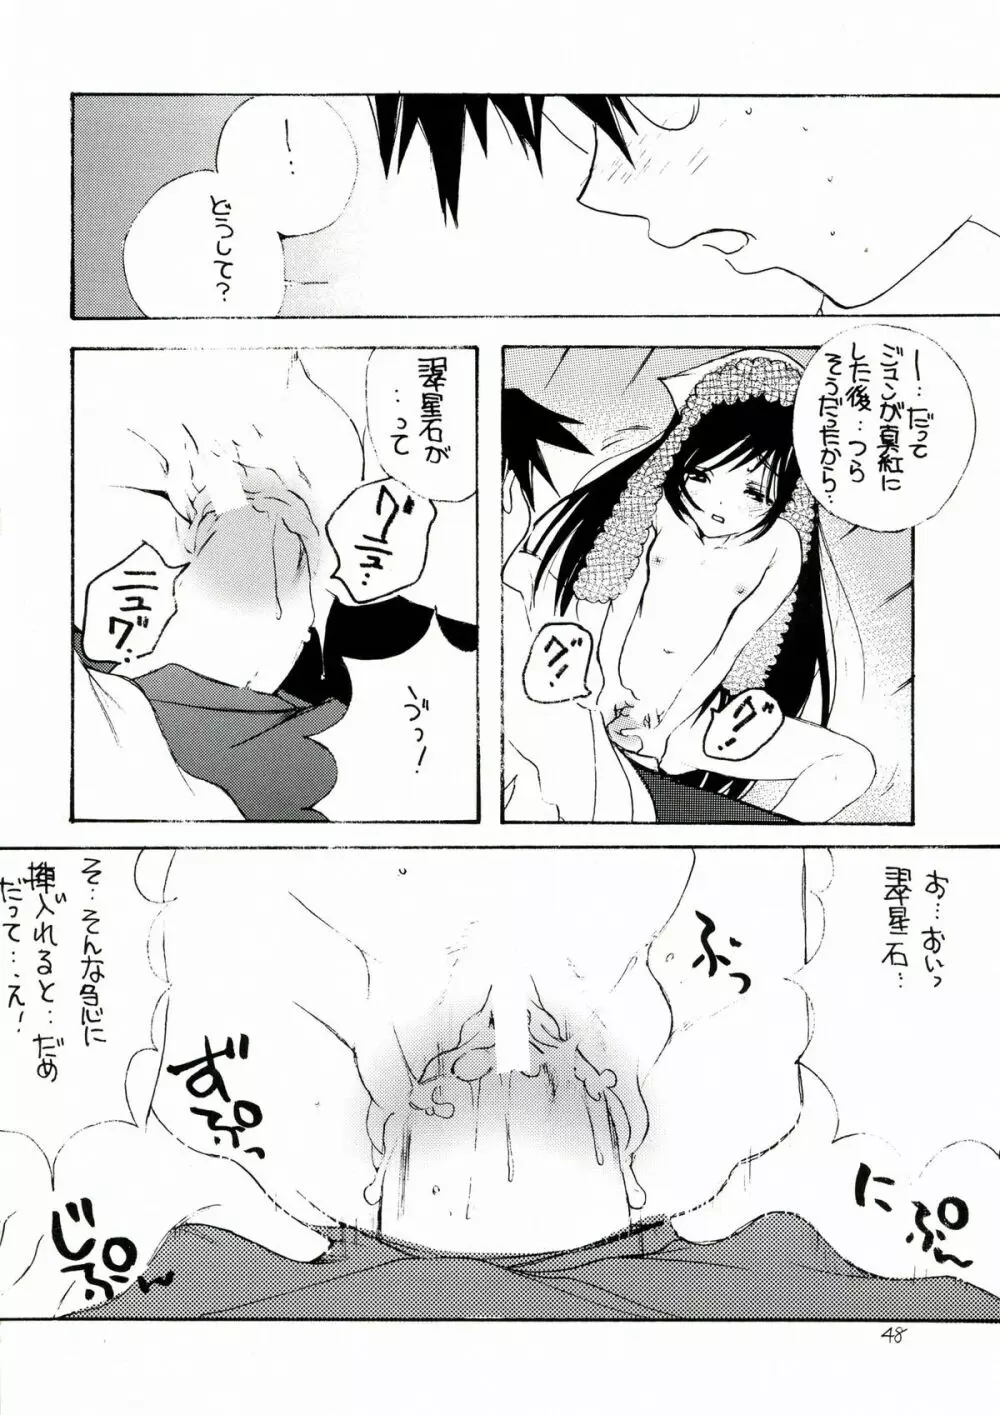 薔薇乙女。桃色日記 - page48